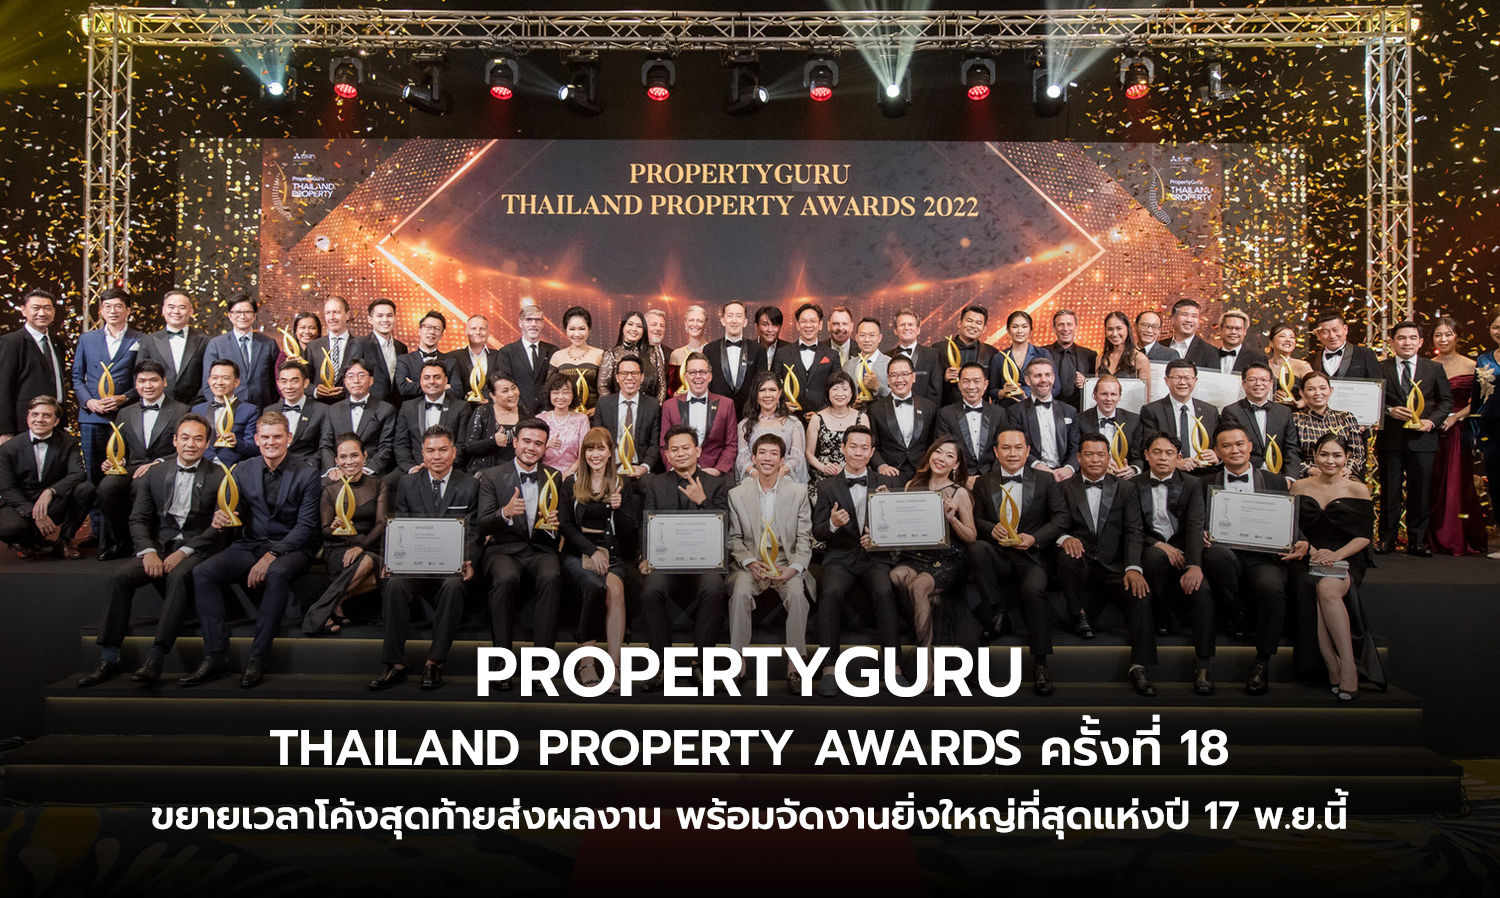 PropertyGuru Thailand Property Awards ครั้งที่ 18 ขยายเวลาโค้งสุดท้ายส่งผลงาน พร้อมจัดงานยิ่งใหญ่ที่สุดแห่งปี 17 พ.ย.นี้